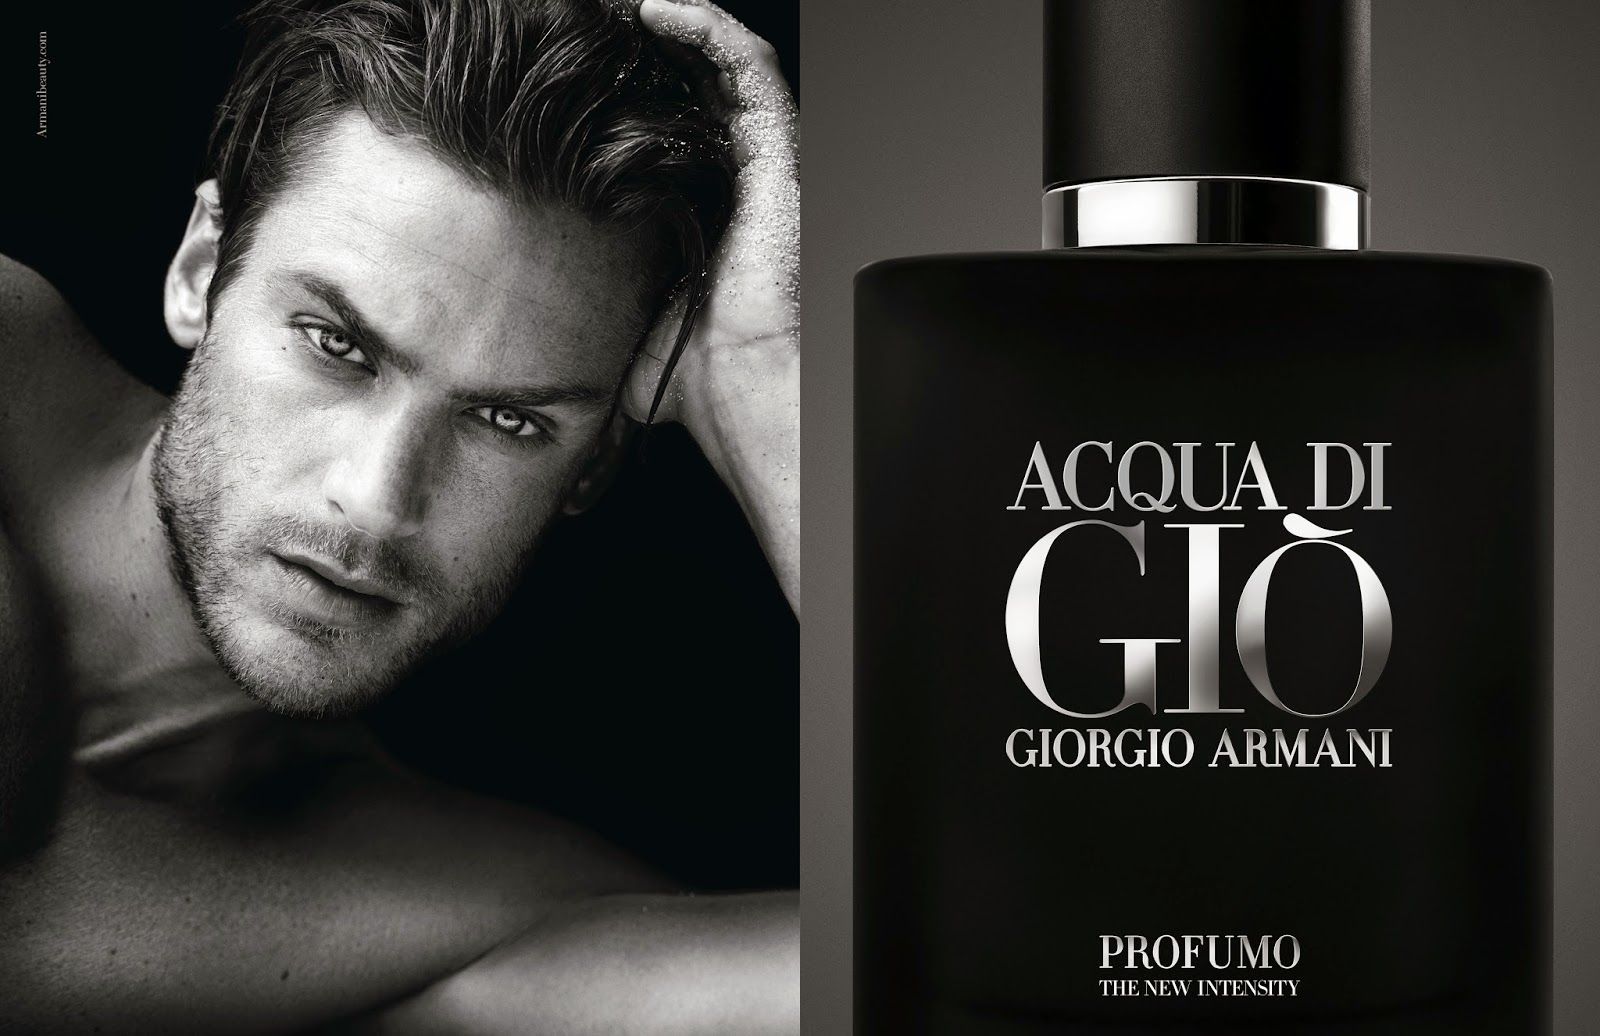 Acqua di Gio Profumo Giorgio Armani for men reklam afiş büyük manken c431c19a216aa2b59acfe6...jpg